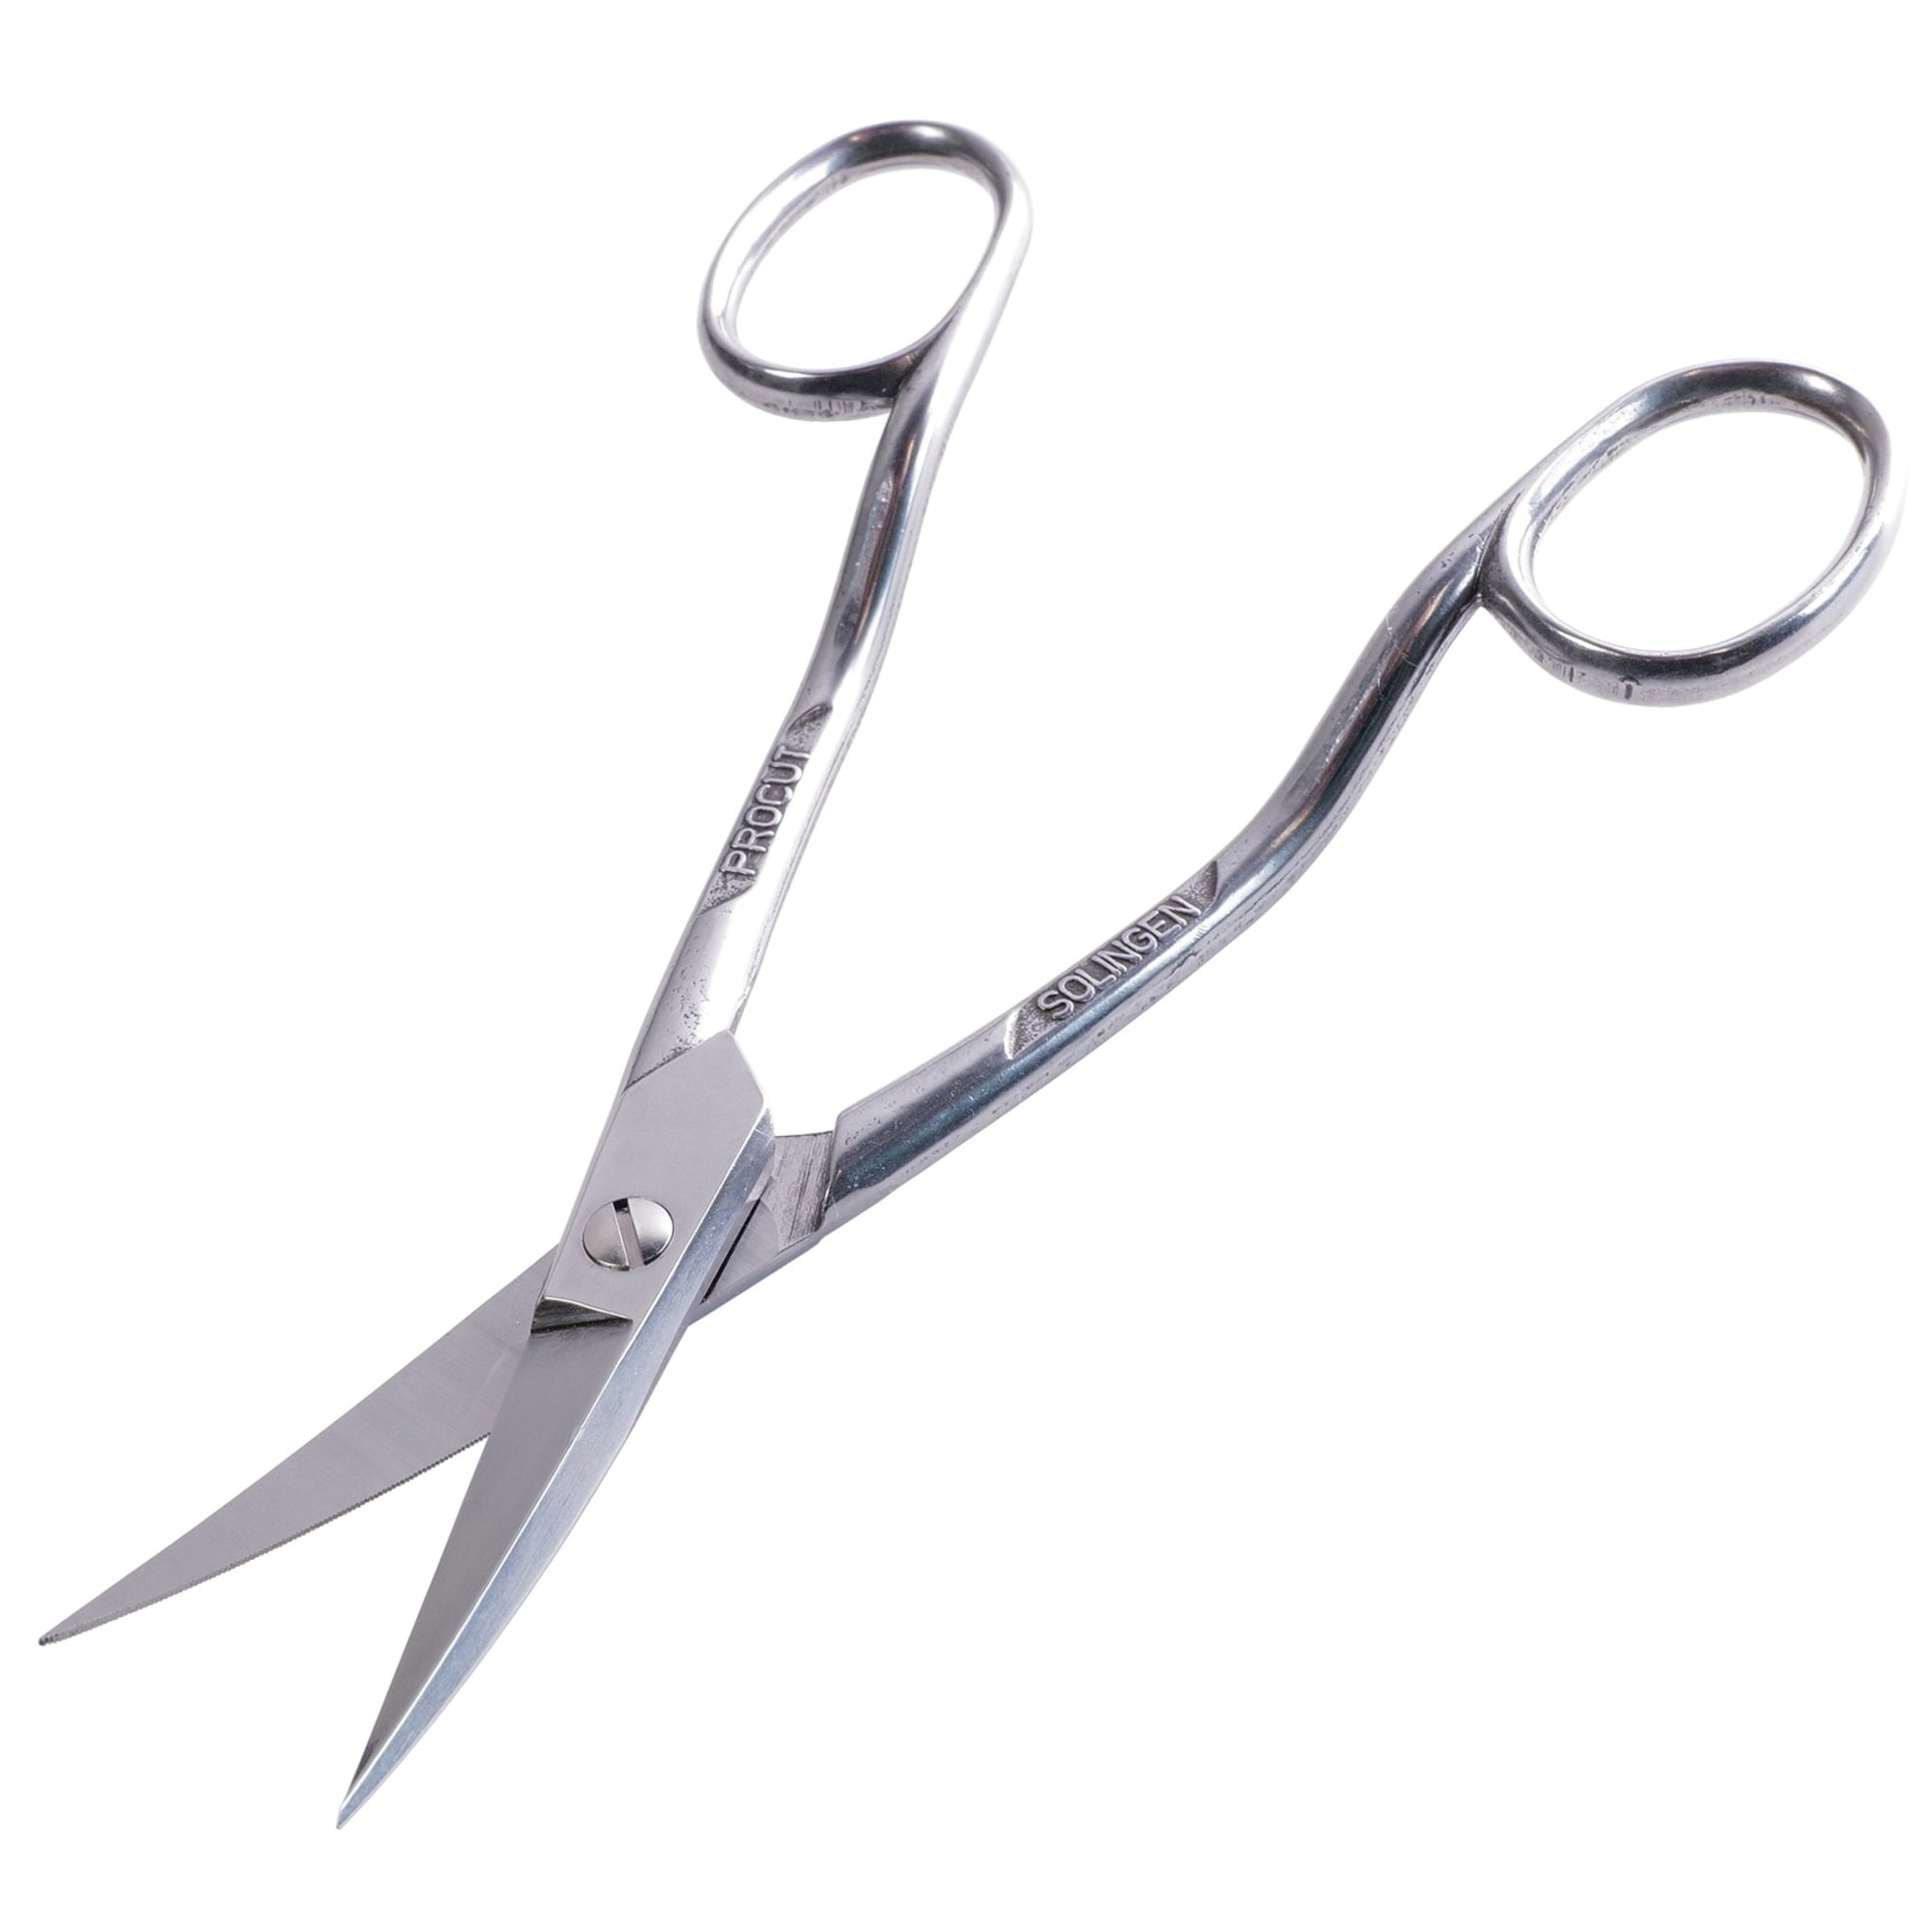 Fabric scissors curved (offset handles), 17.5 cm / 7" length, image 2